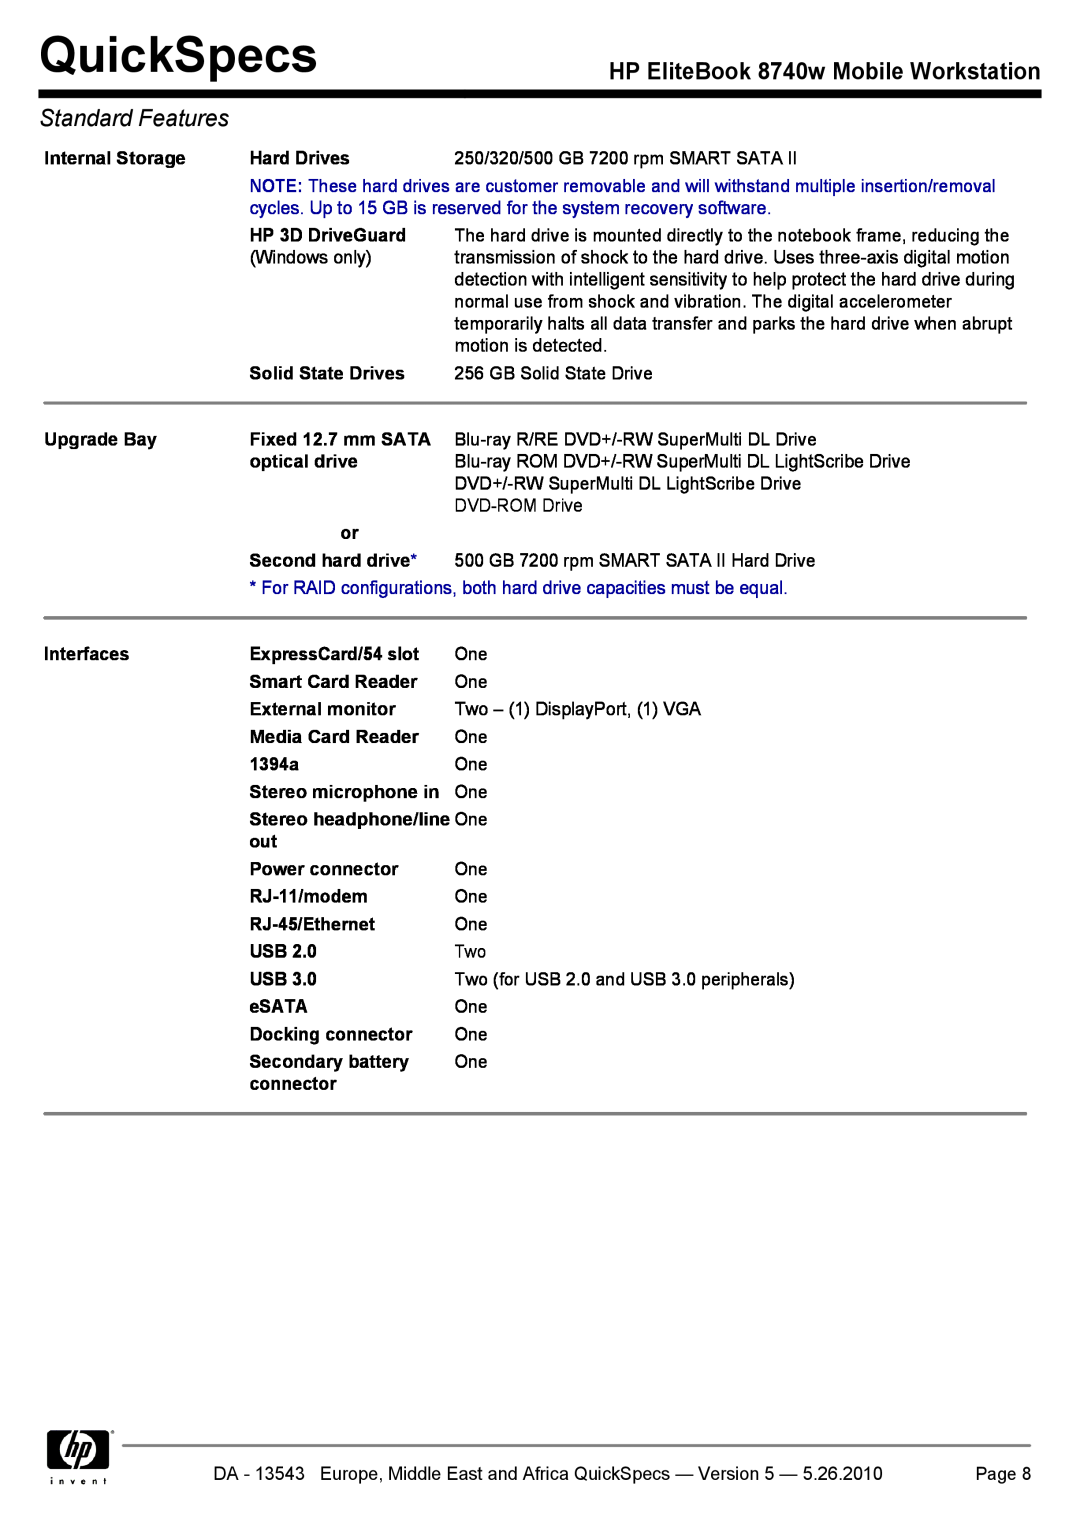 HP manual QuickSpecs, HP EliteBook 8740w Mobile Workstation, Standard Features 